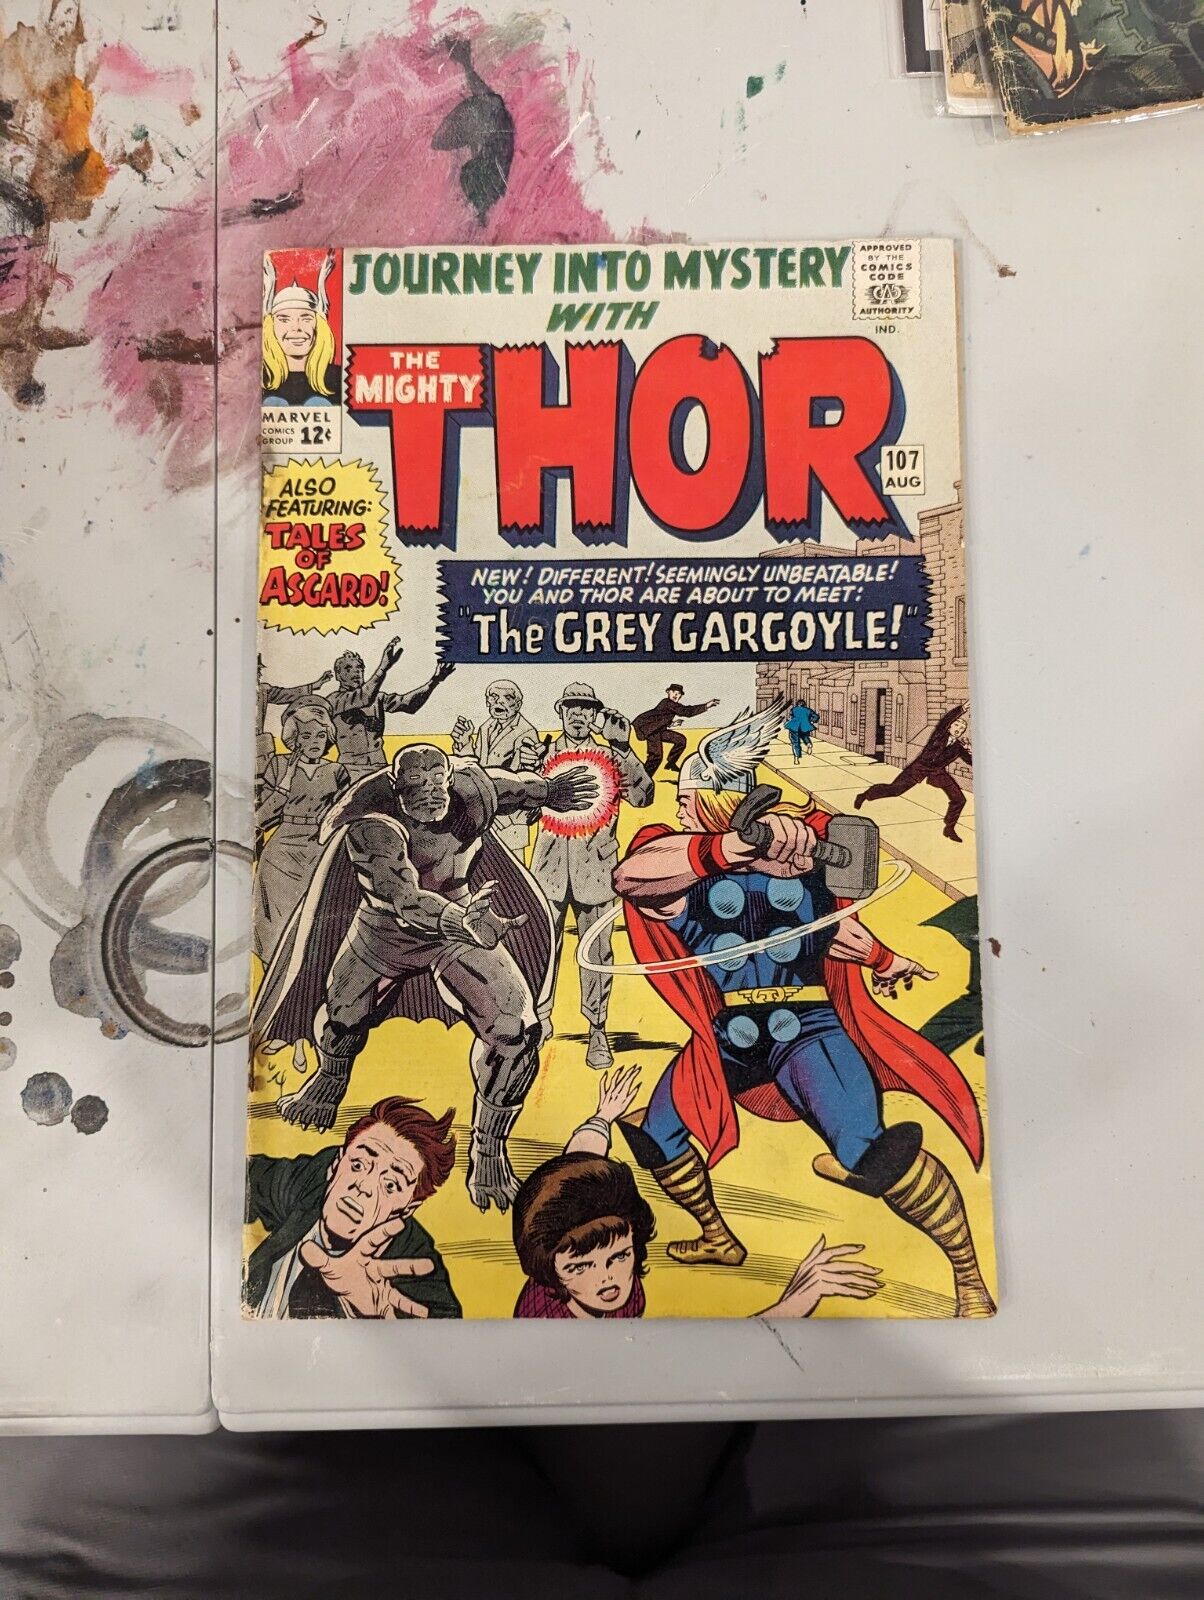 Journey into Mystery #107 (Marvel Comics AUG 1964)